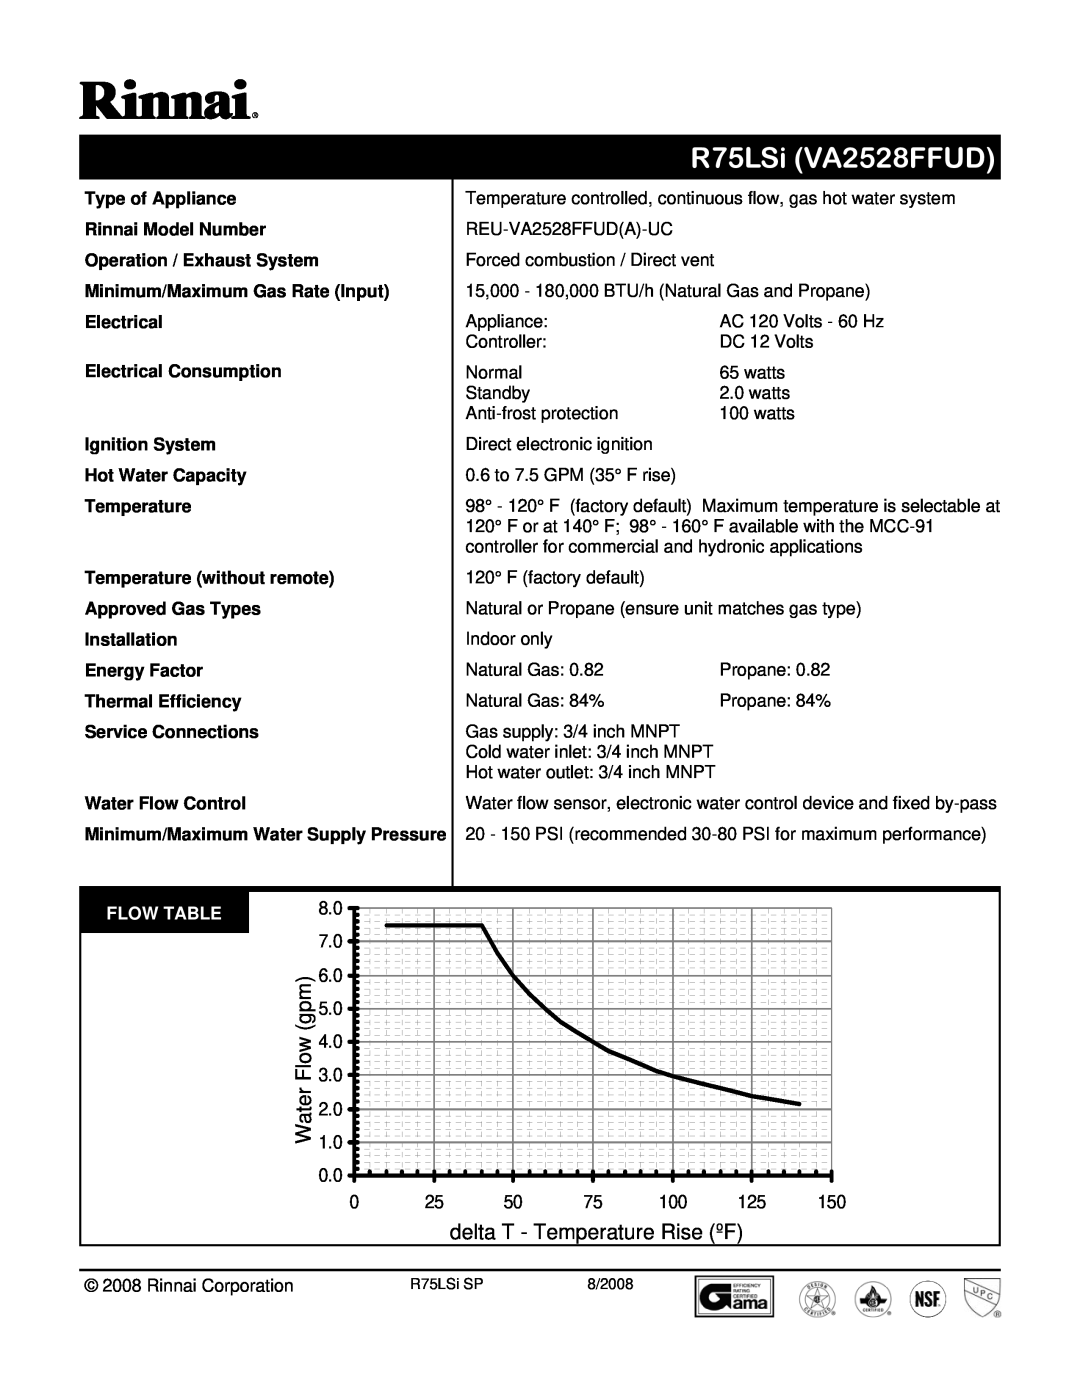 Rinnai R75LSI (VA2528FFUD) manual R75LSi VA2528FFUD, Flow3.0, delta T - Temperature Rise ºF 